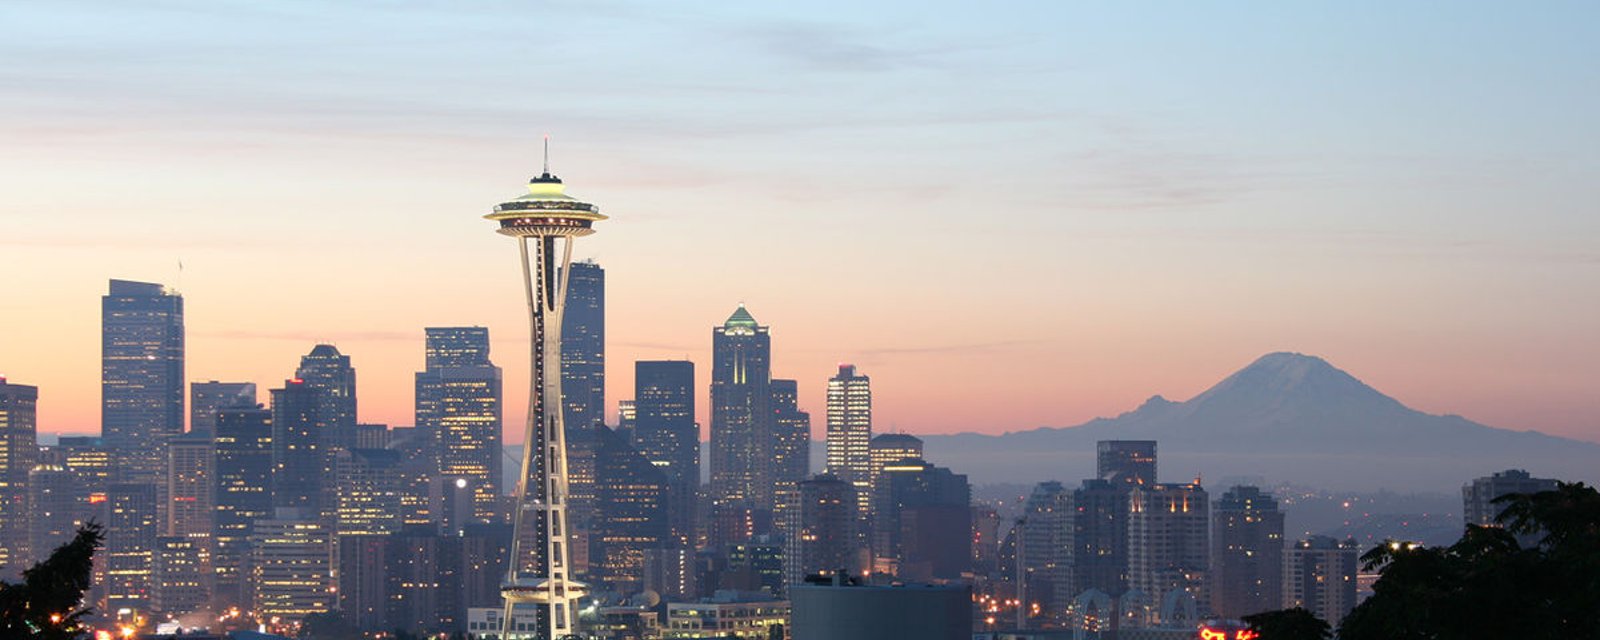 Breaking : Major setback in Seattle's bid for franchise. 